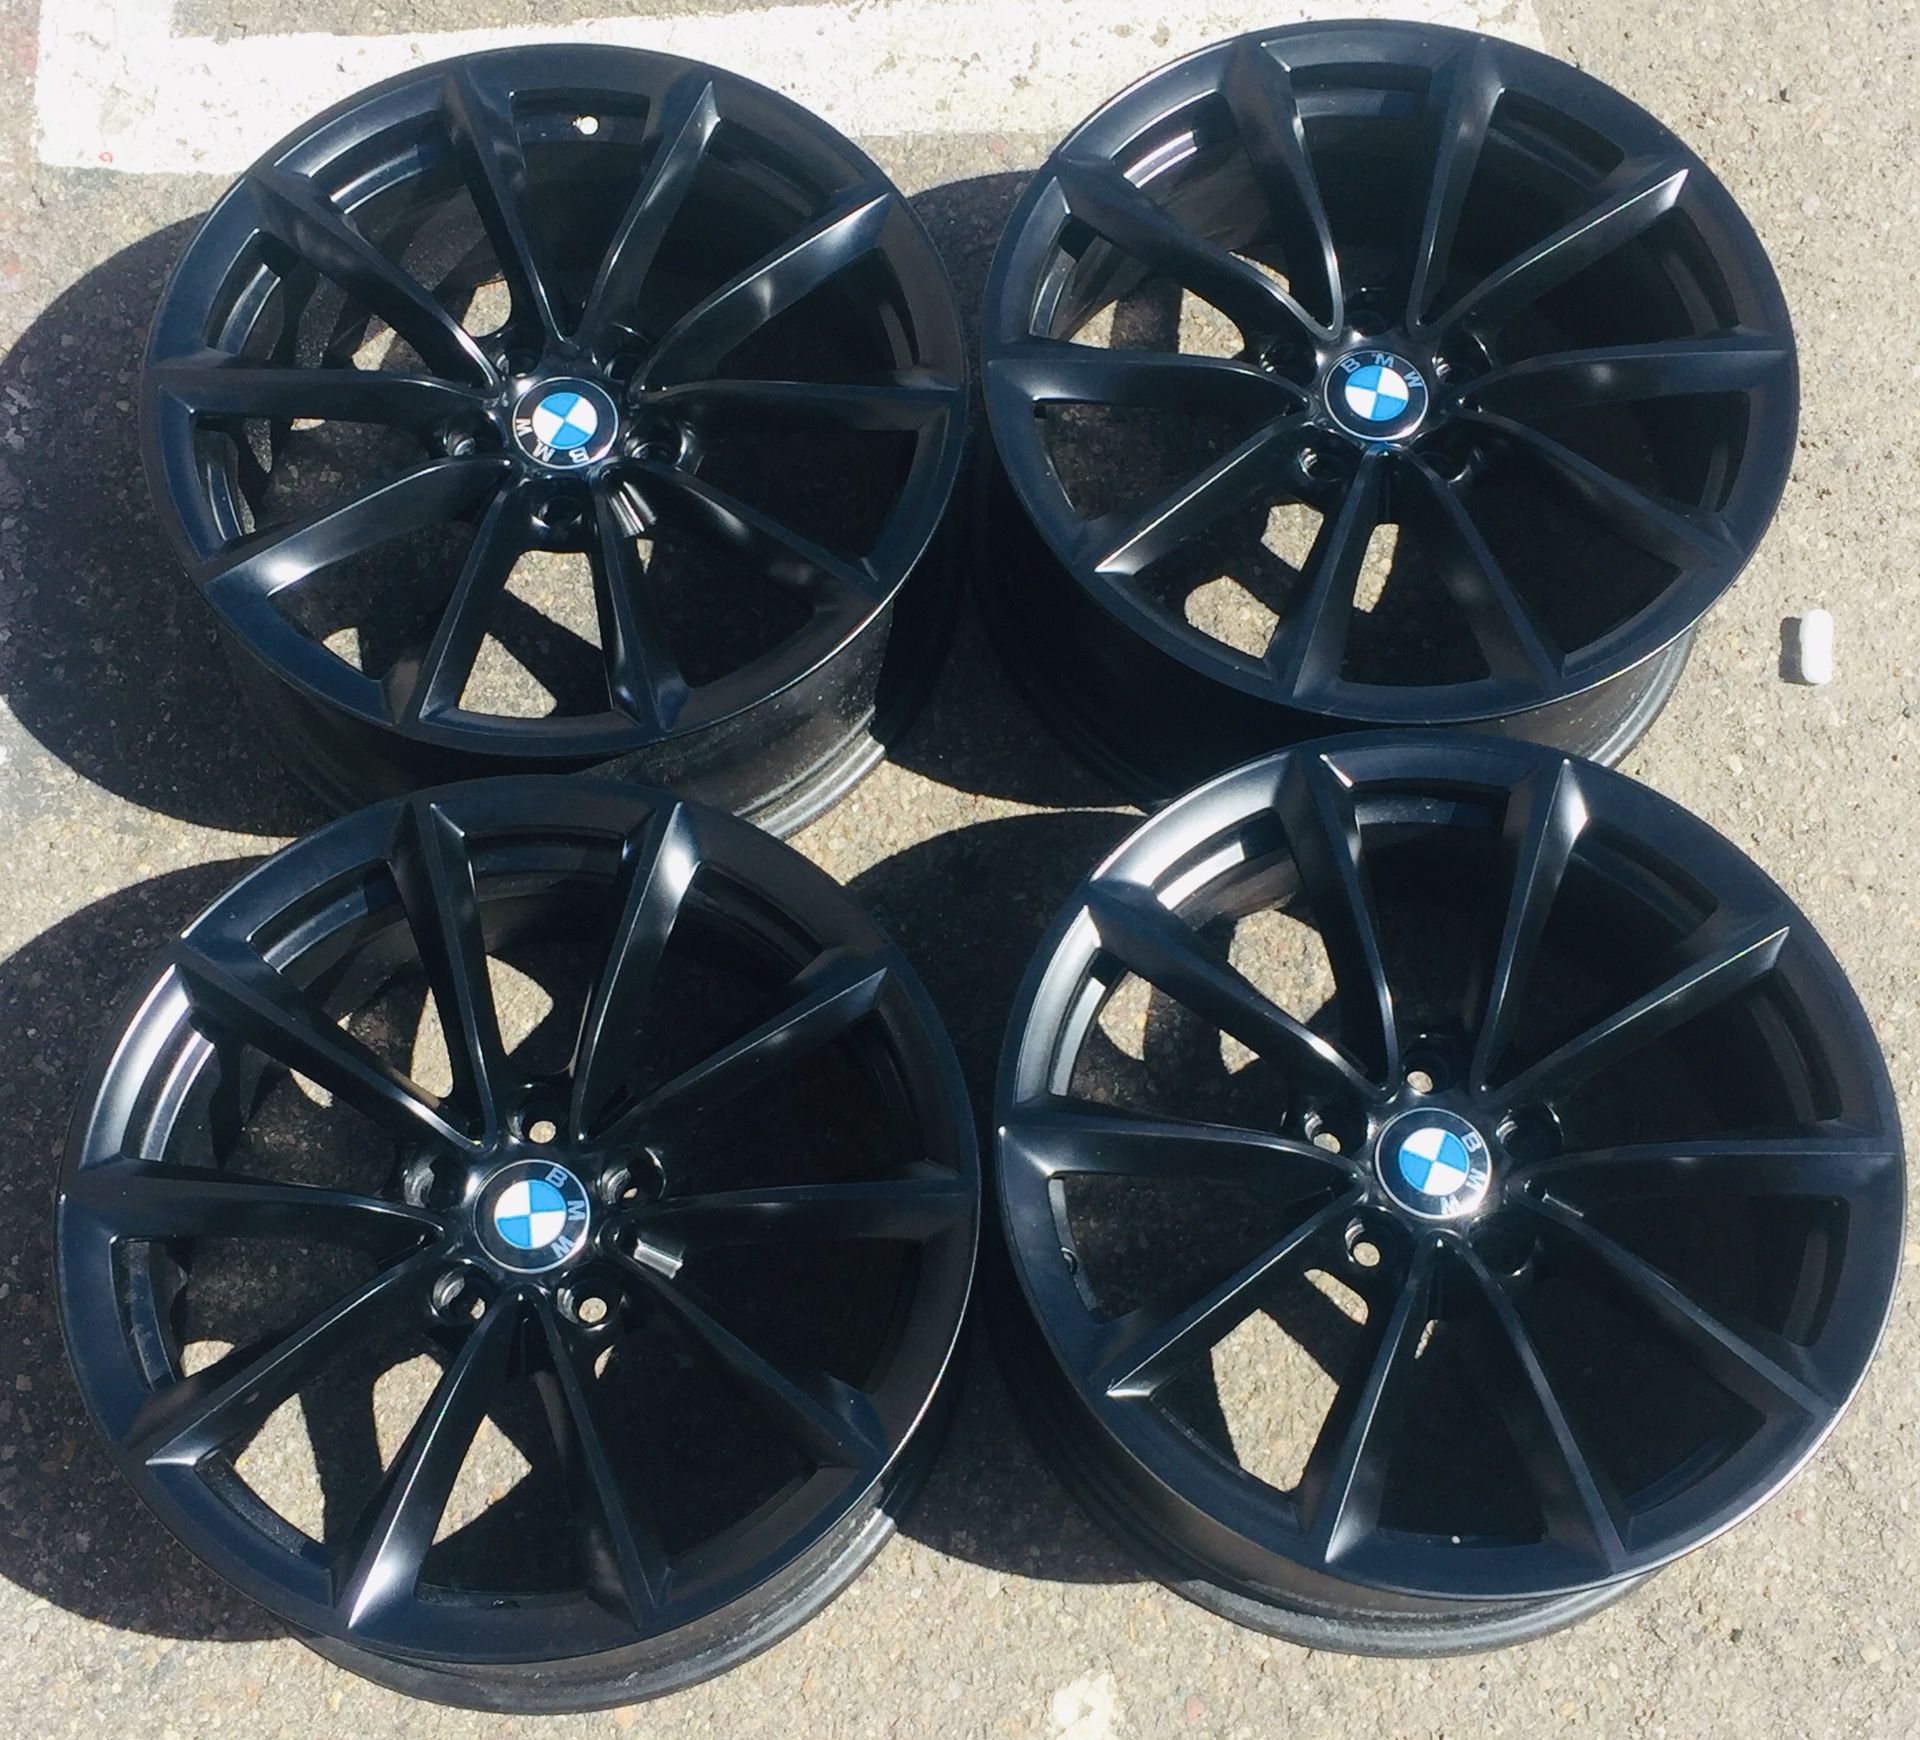 OEM BMW 19” Wheels Rims Rines Black Satin Matte